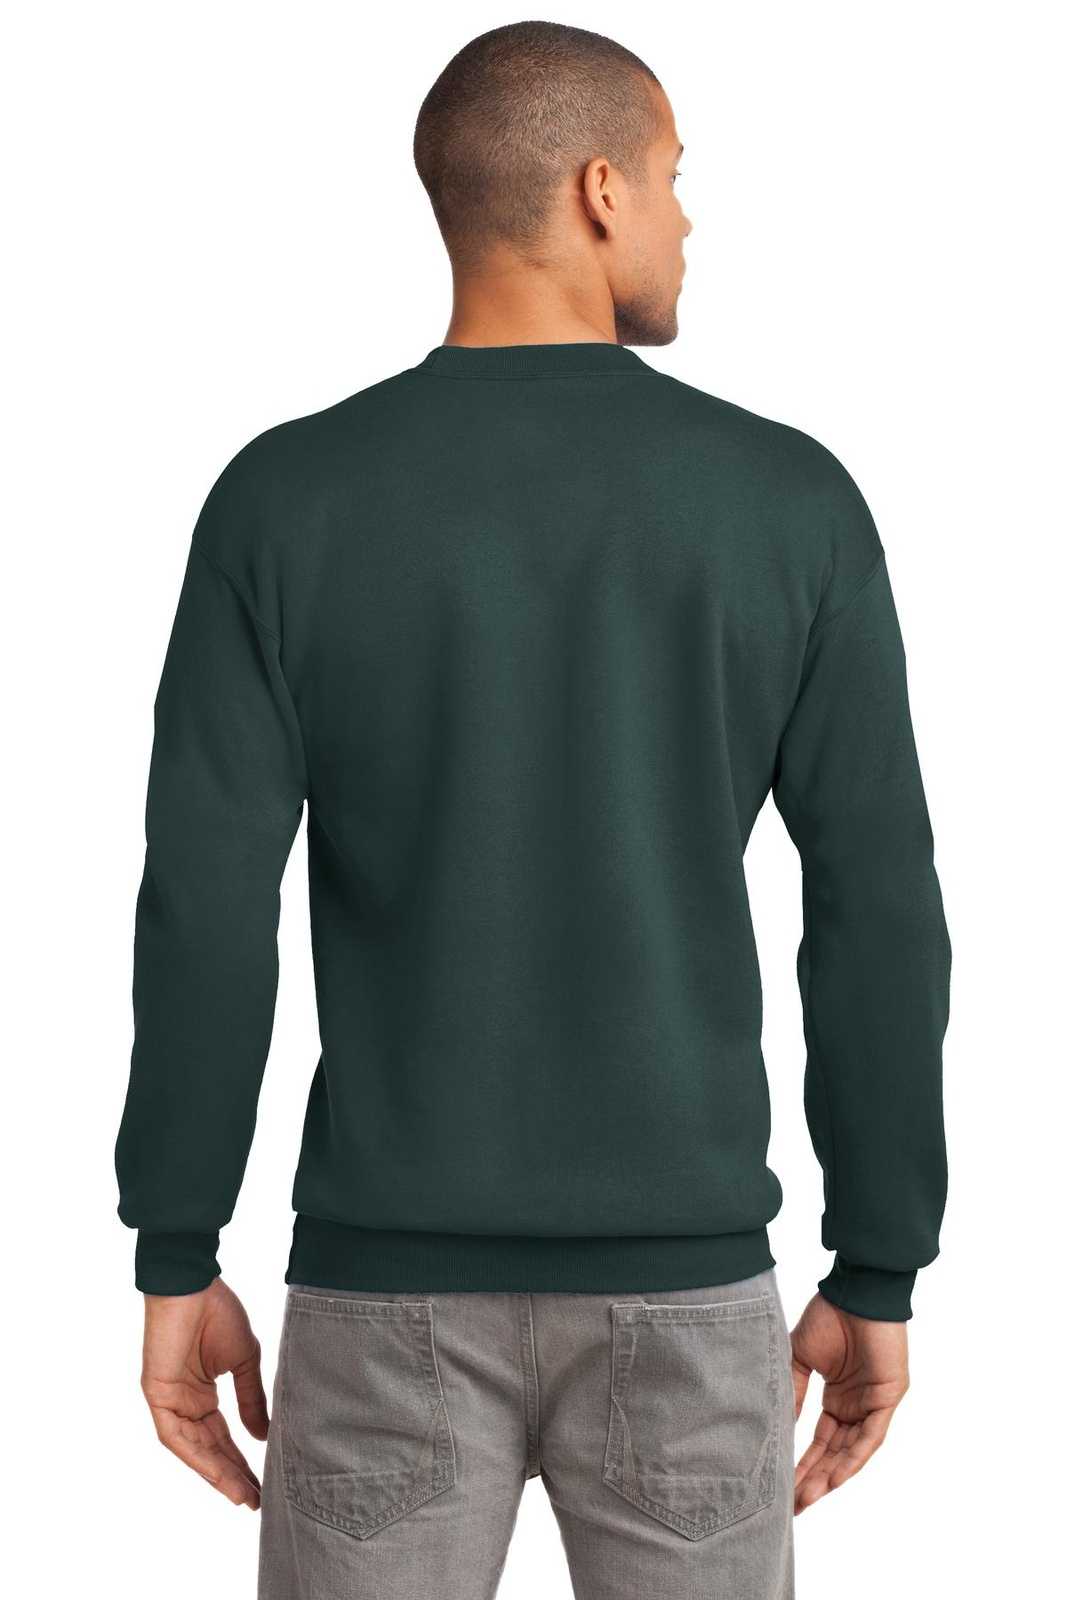 Port &amp; Company PC90T Tall Essential Fleece Crewneck Sweatshirt - Dark Green - HIT a Double - 2